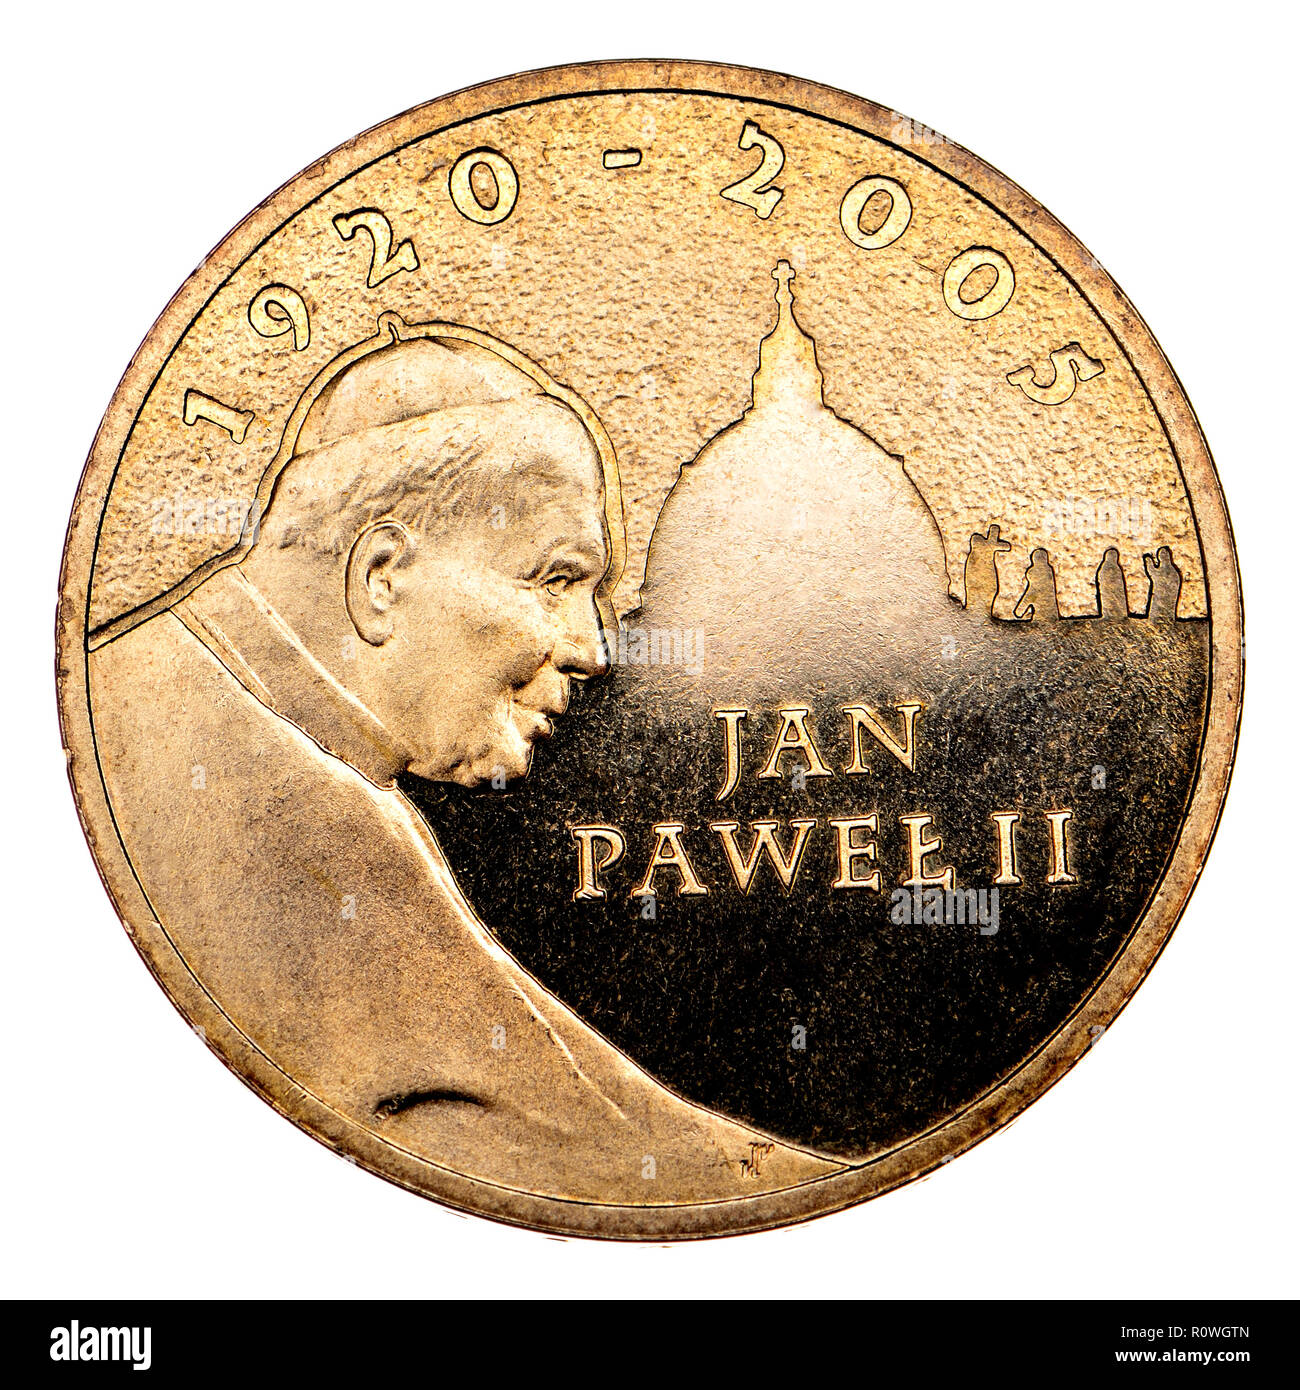 Pope John Paul II on a Polish 2Zl commemorative coin. 'Nordic Gold' (alloy of copper, aluminium, zinc, and tin). Stock Photo